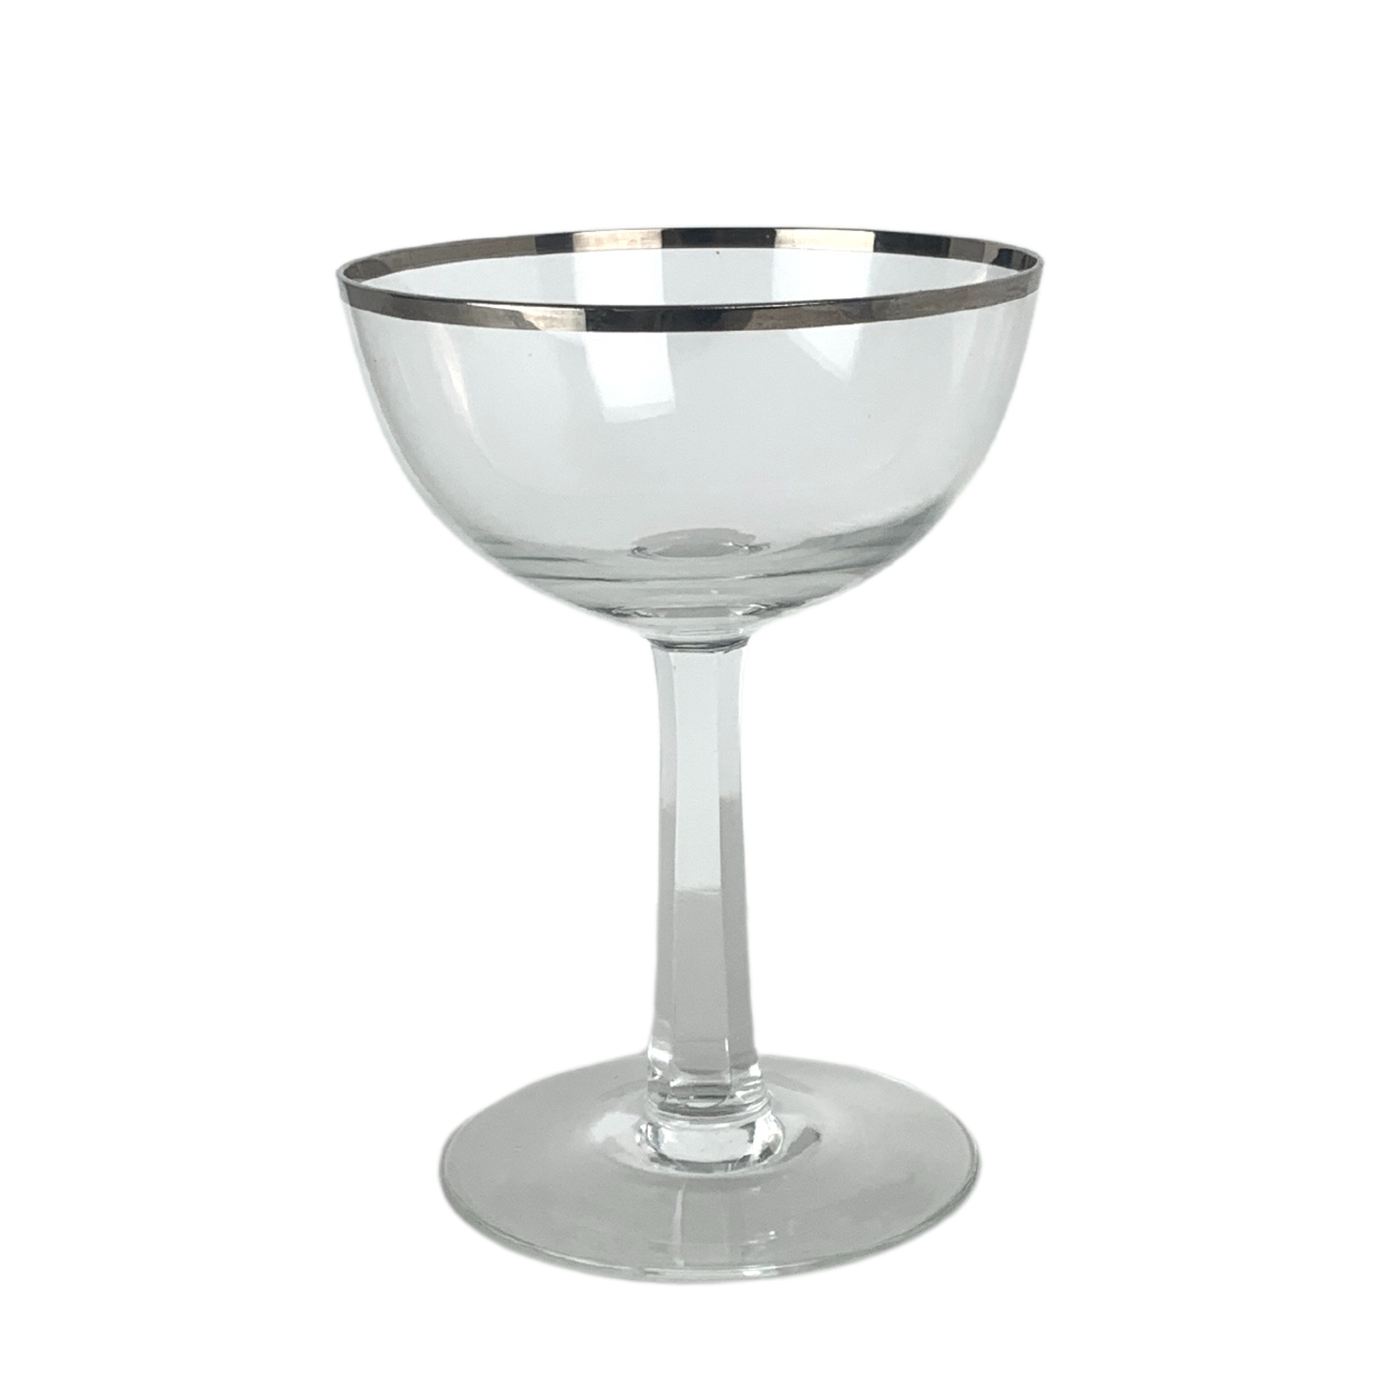 Kusak Crystal 'Platinum Classic', Martini - Set of 2